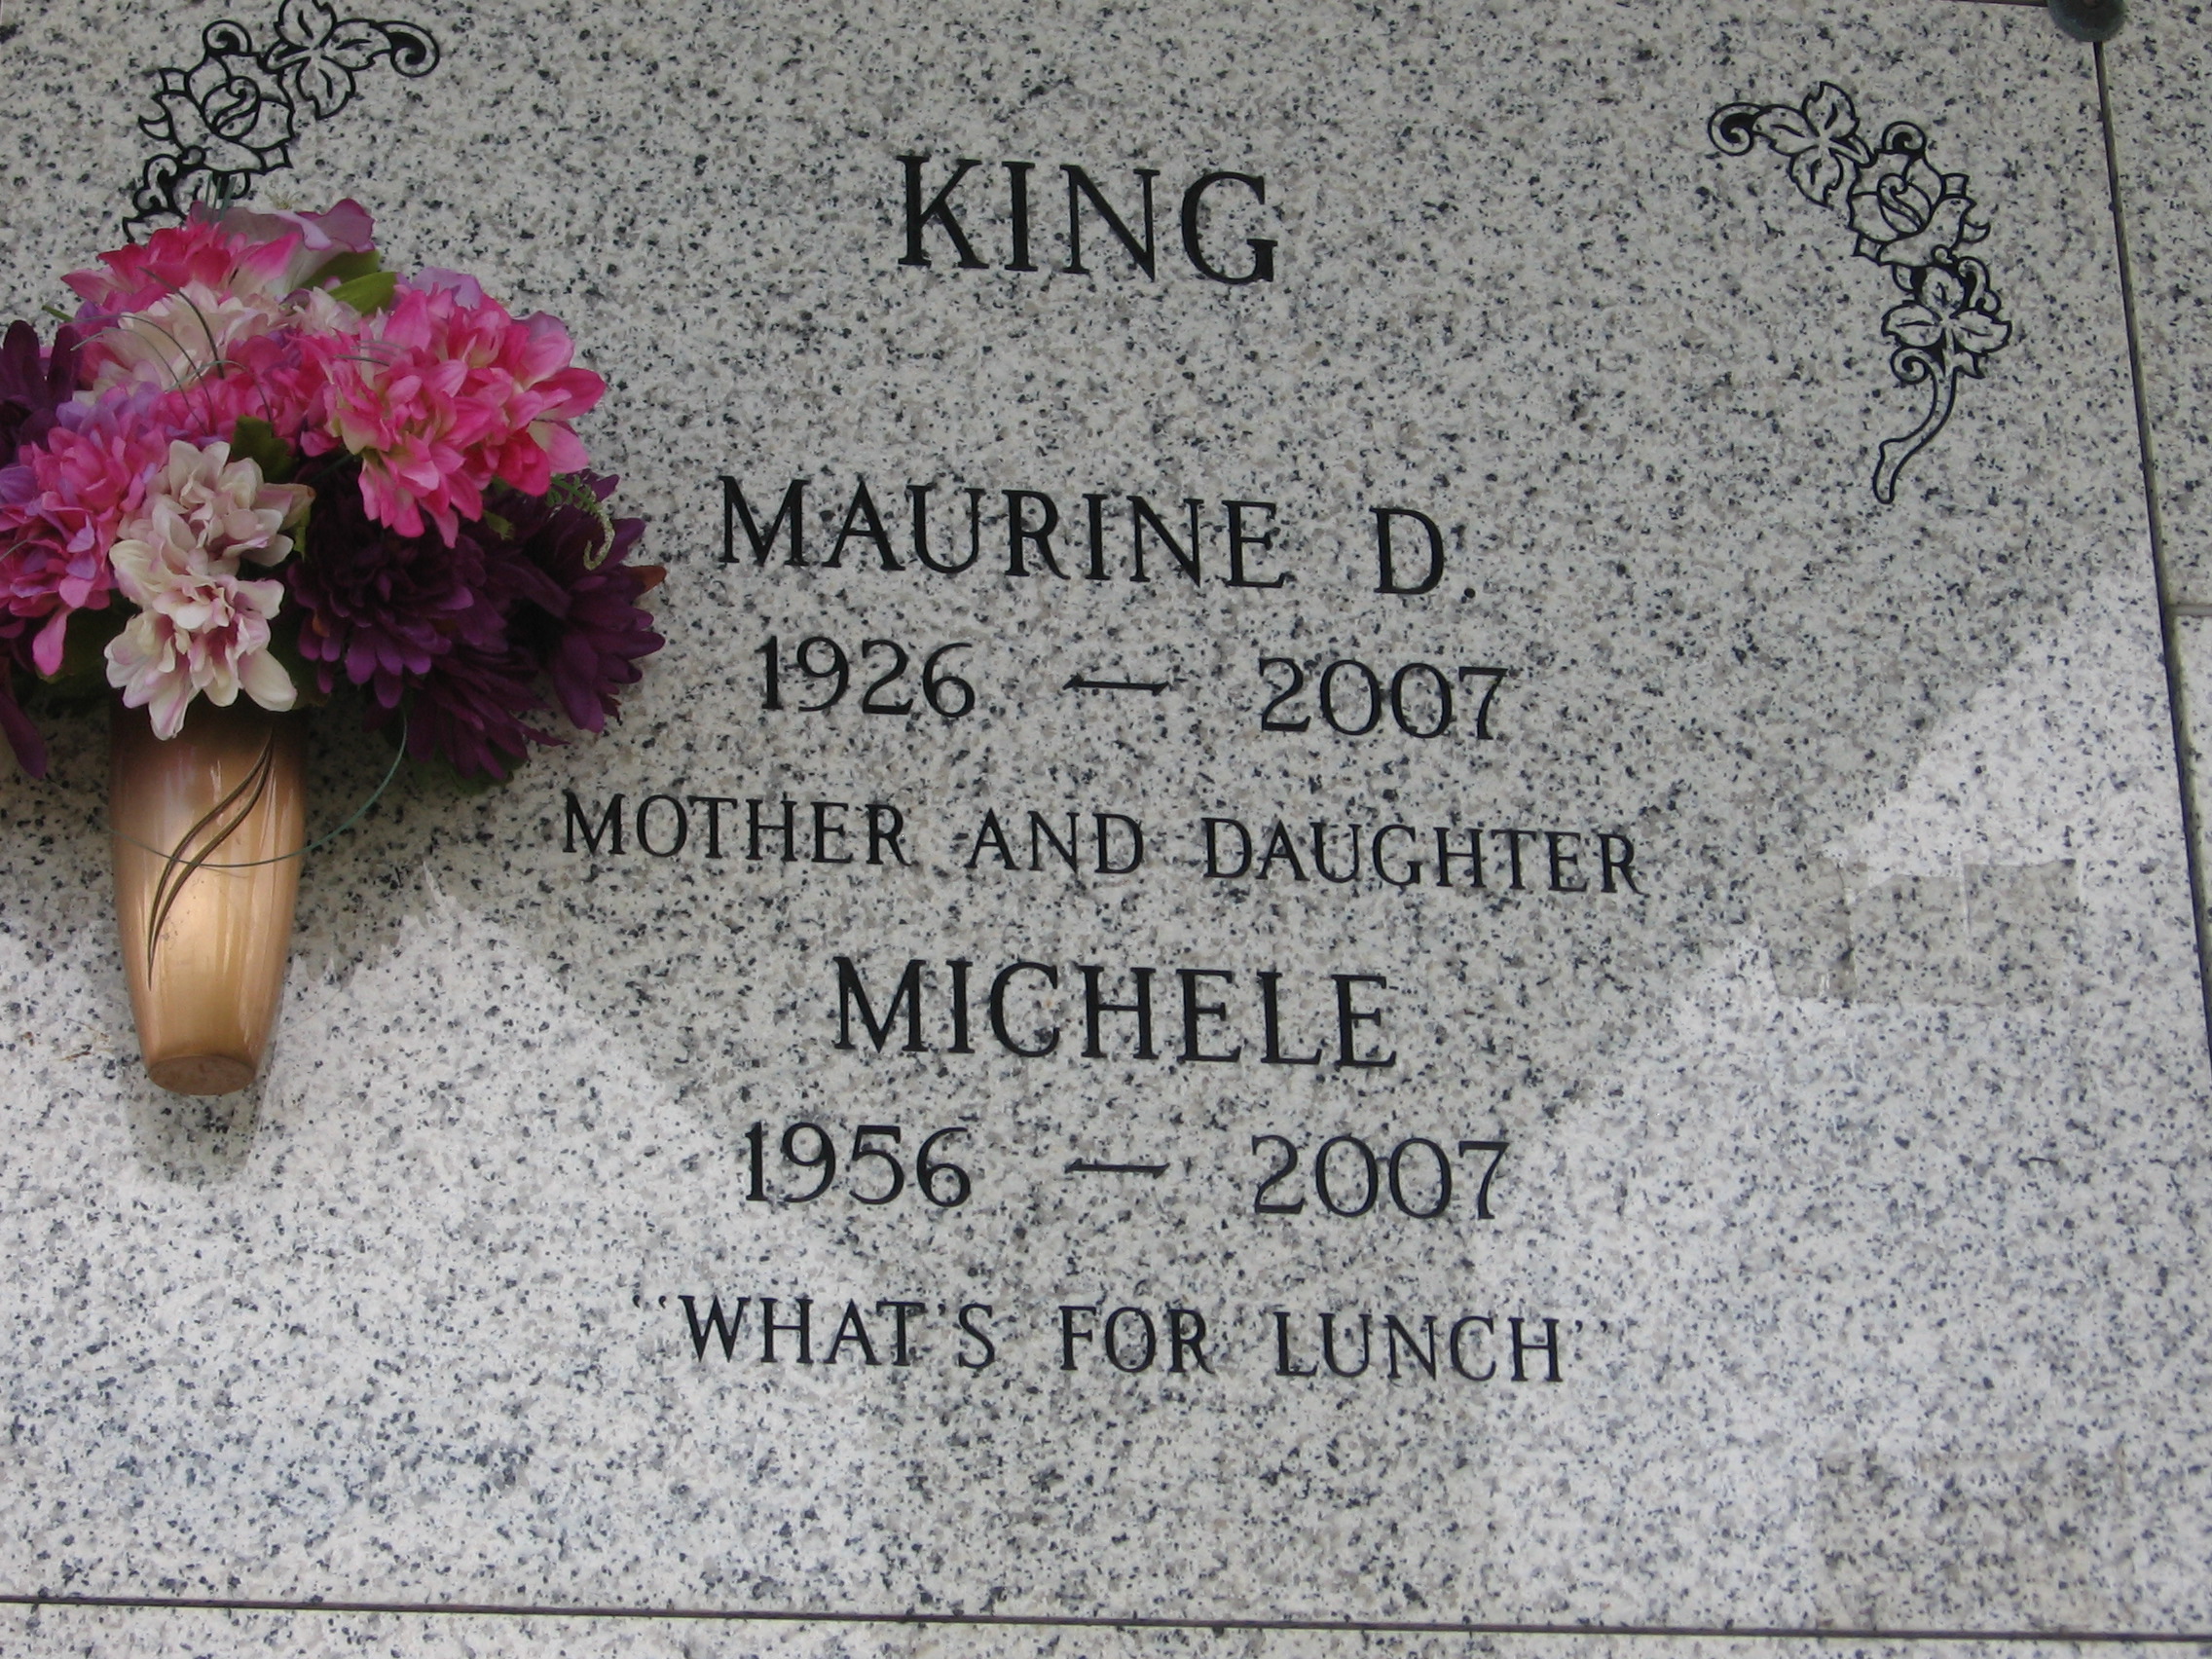 Michele King